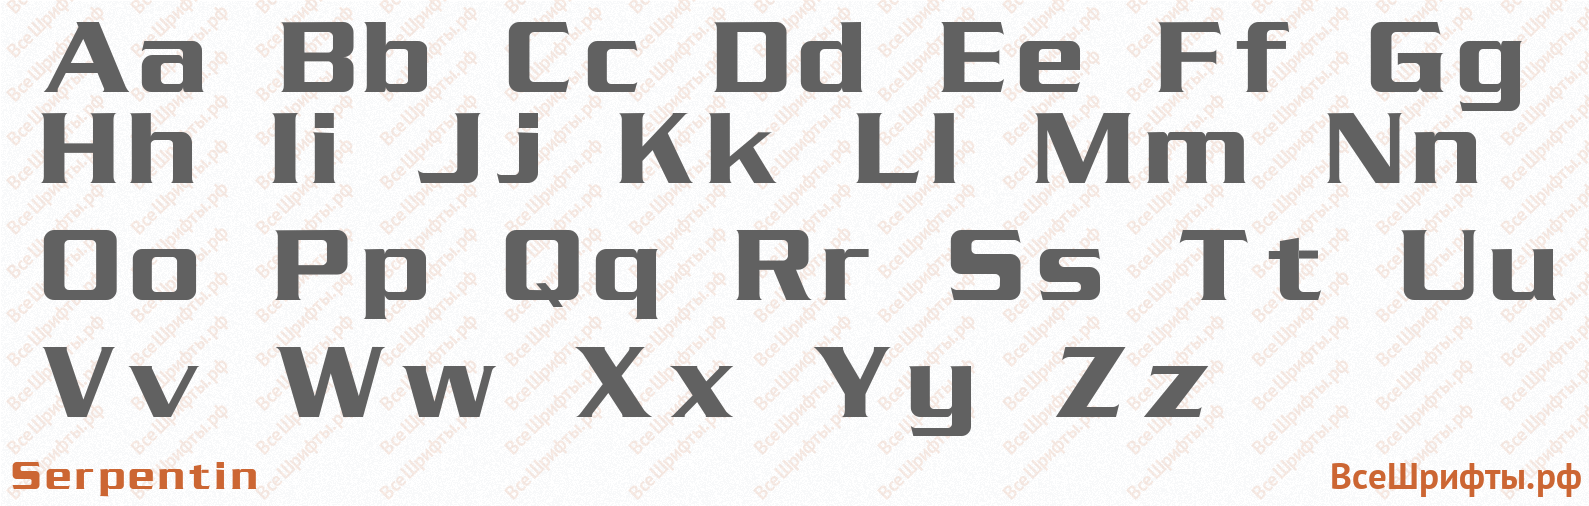 Шрифт Serpentin с латинскими буквами